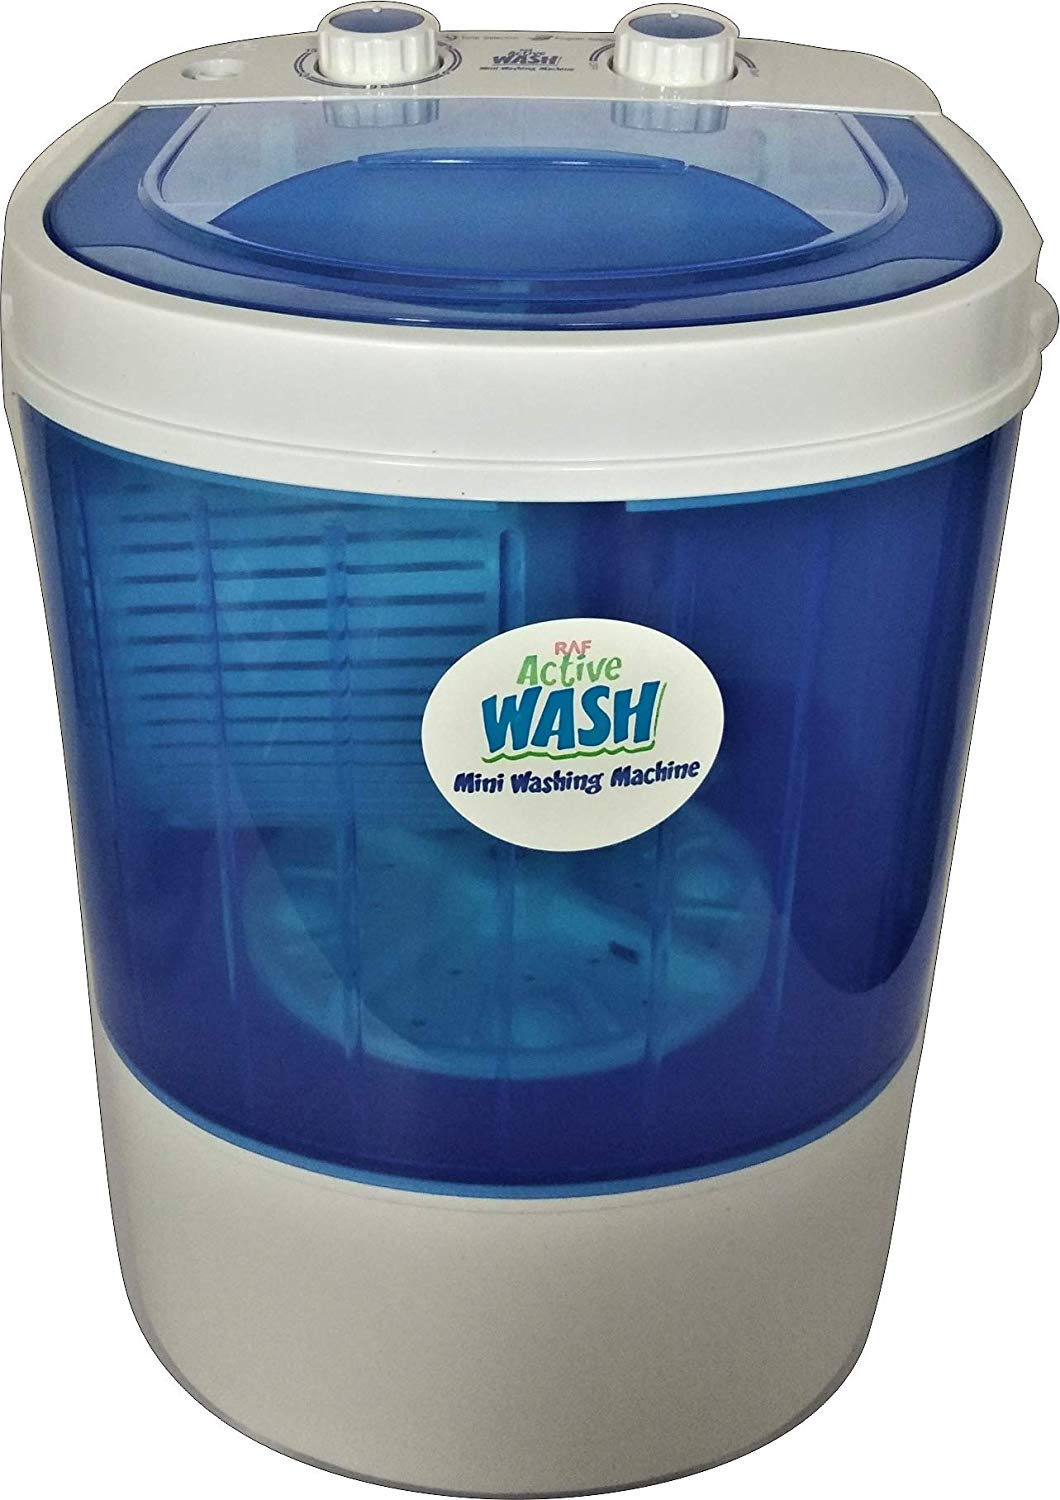 DFS Portable Active Wash Mini Washing Machine with Dryer Basket - 4.5